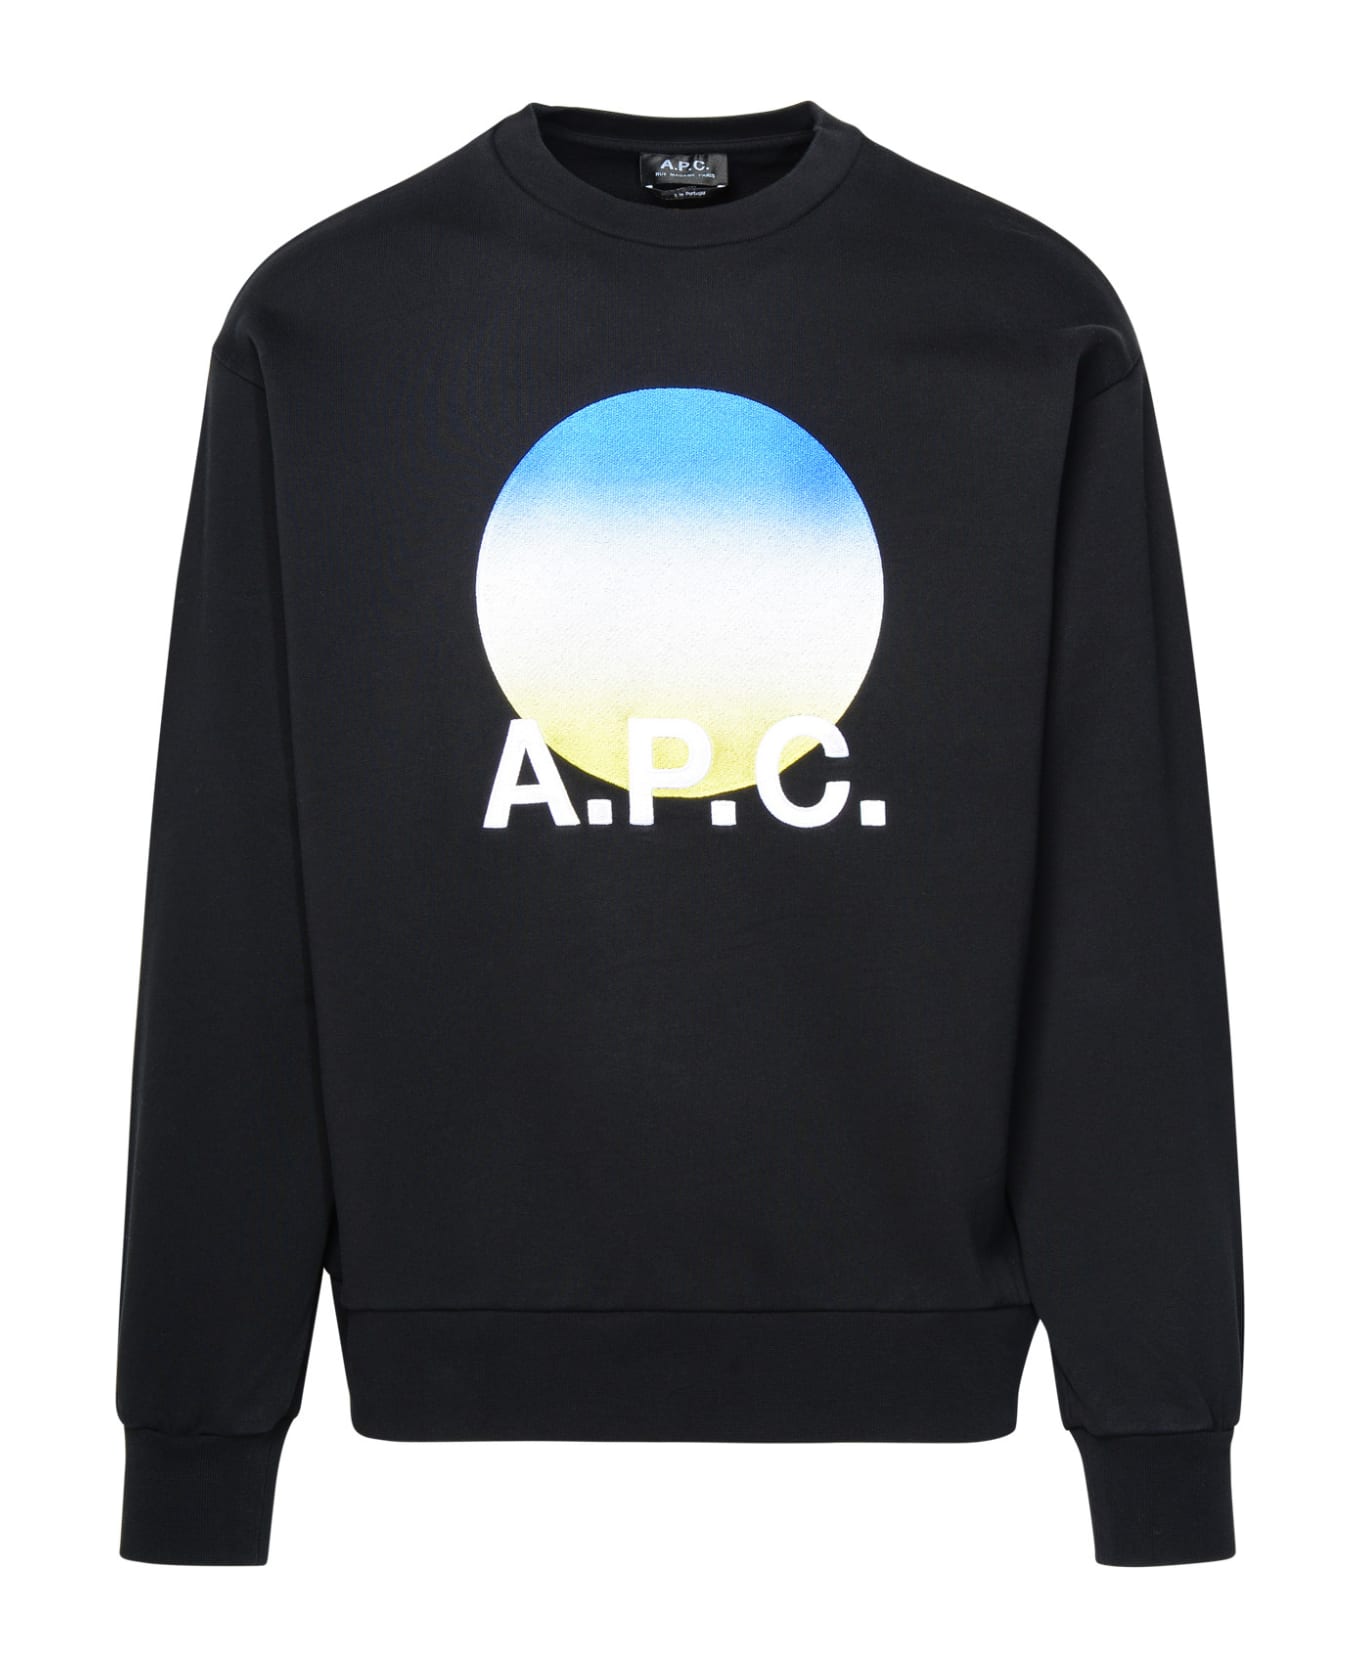 A.P.C. Black Cotton Sweatshirt - Black